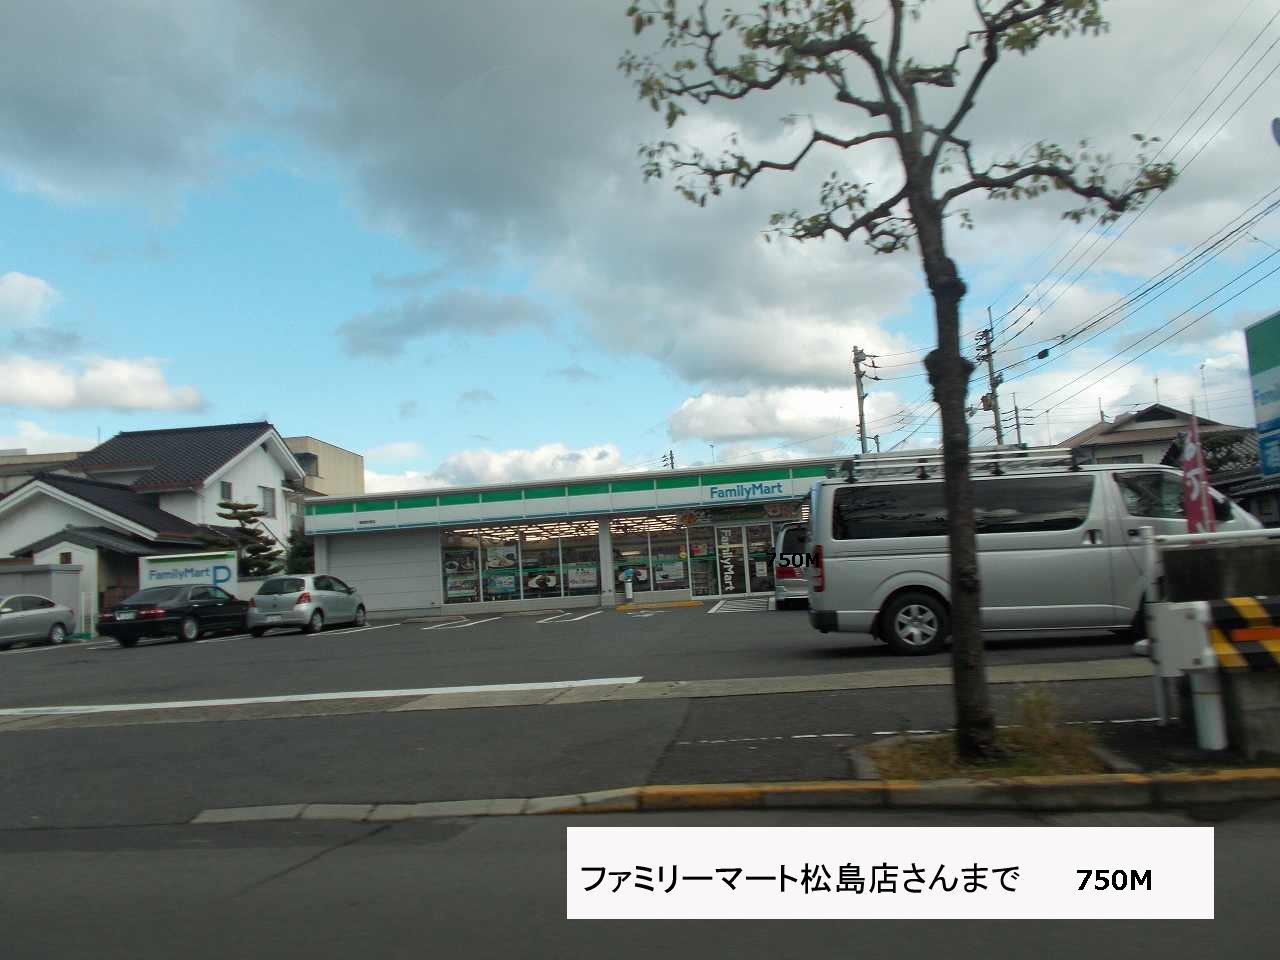 Convenience store. FamilyMart Matsushima store up (convenience store) 750m